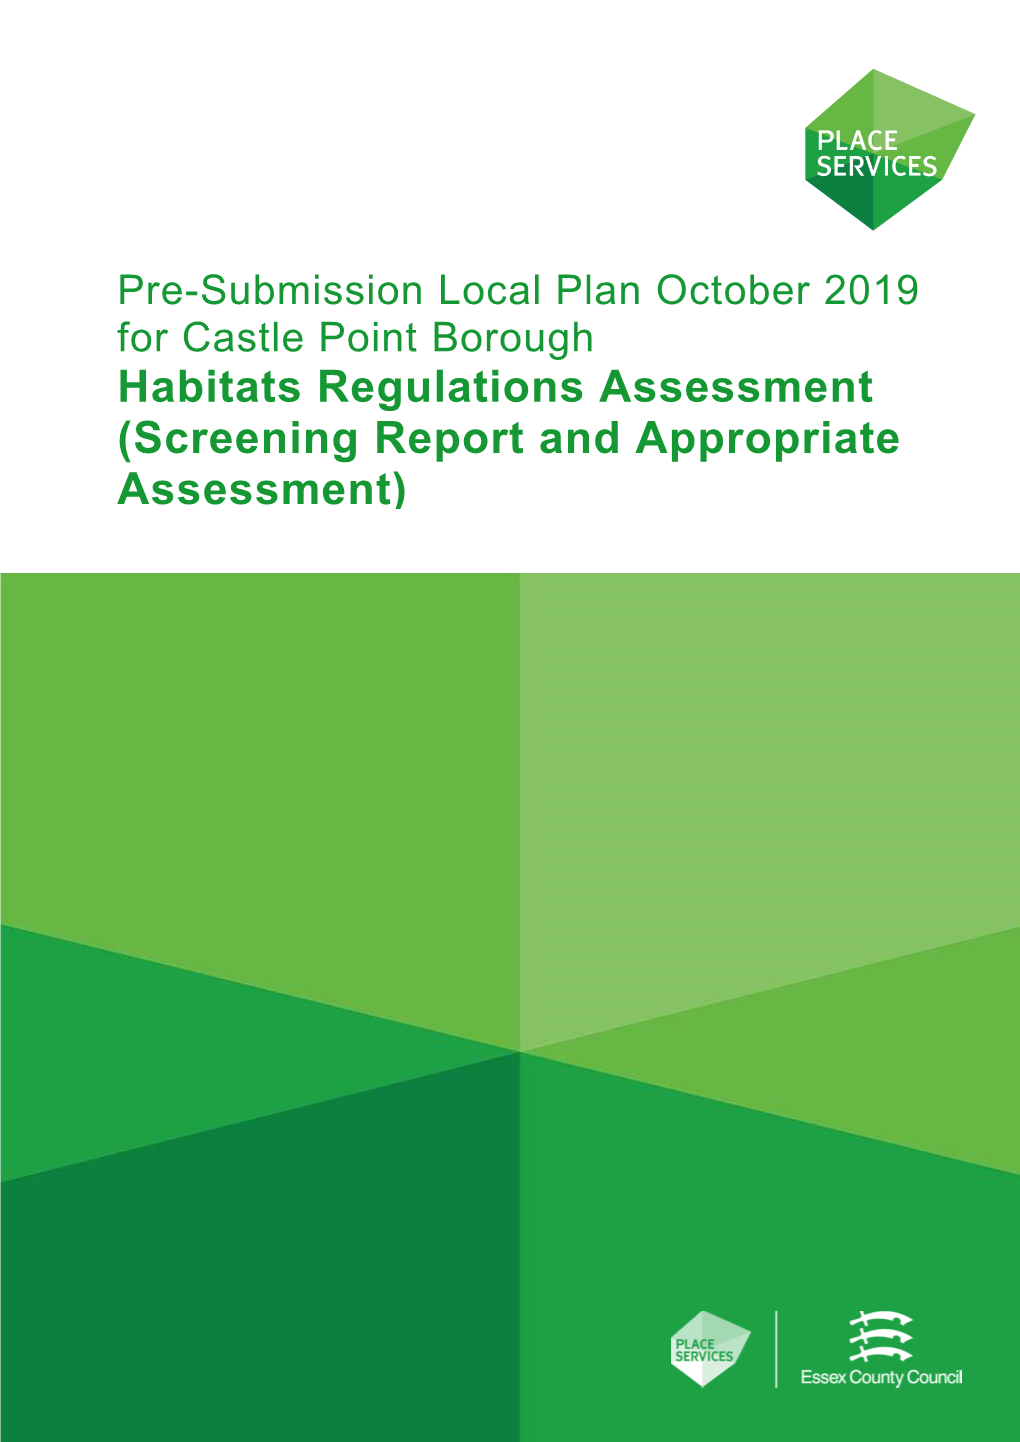 Habitats Regulations Assessment (Screening Report and Appropriate Assessment)